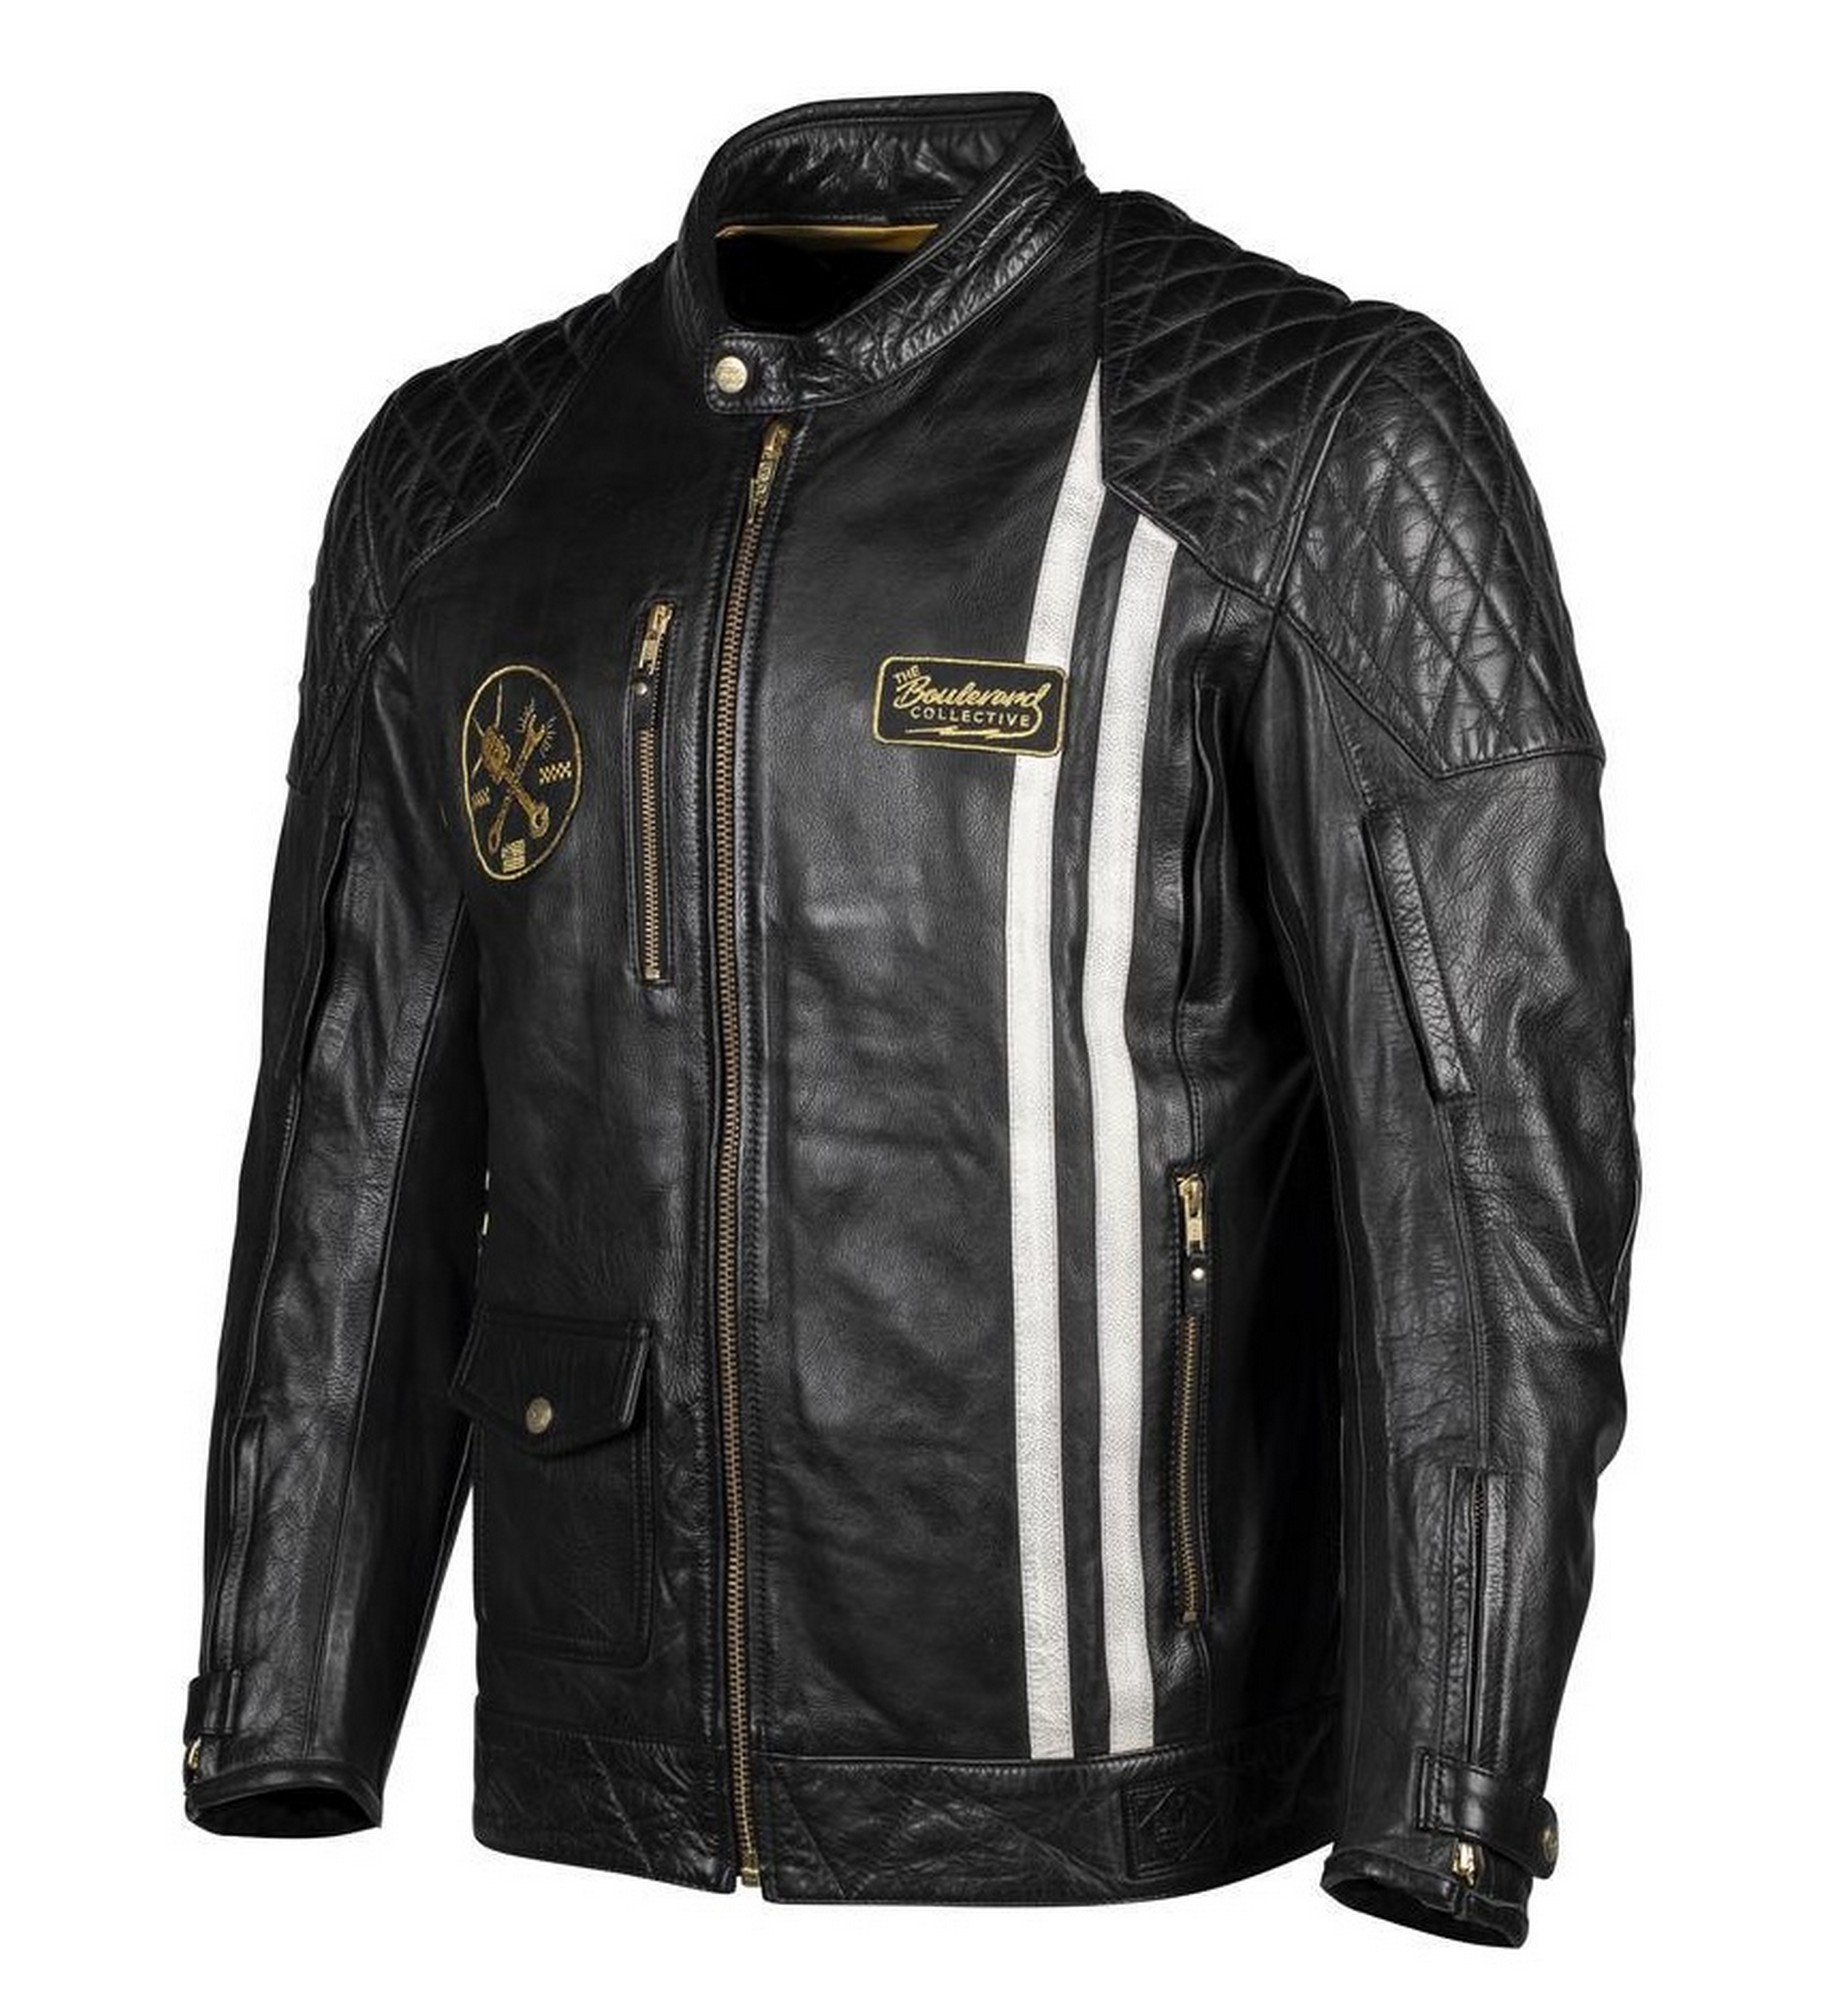 Cortech Trans-Am Mens Leather Motorcycle Jacket Black | eBay